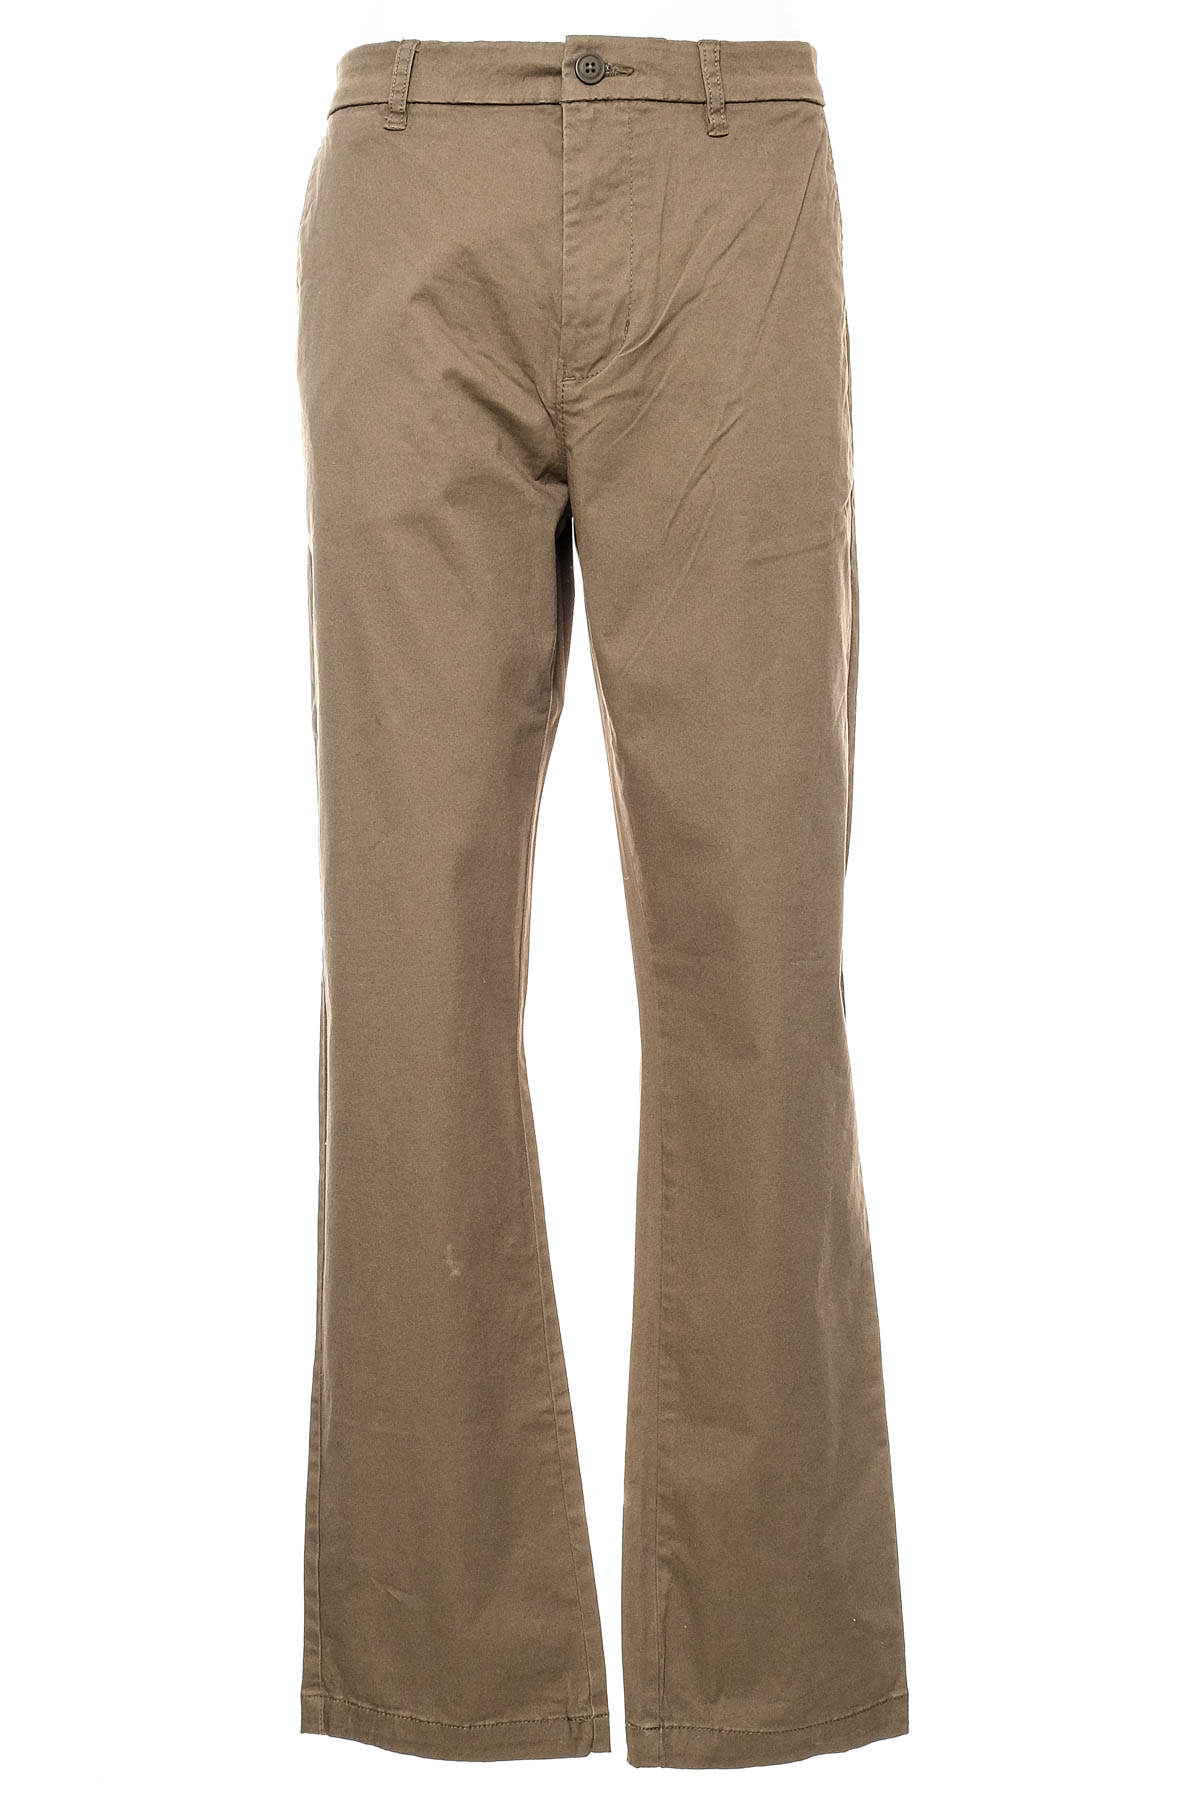 Pantalon pentru bărbați - Dunnes Stores - 0